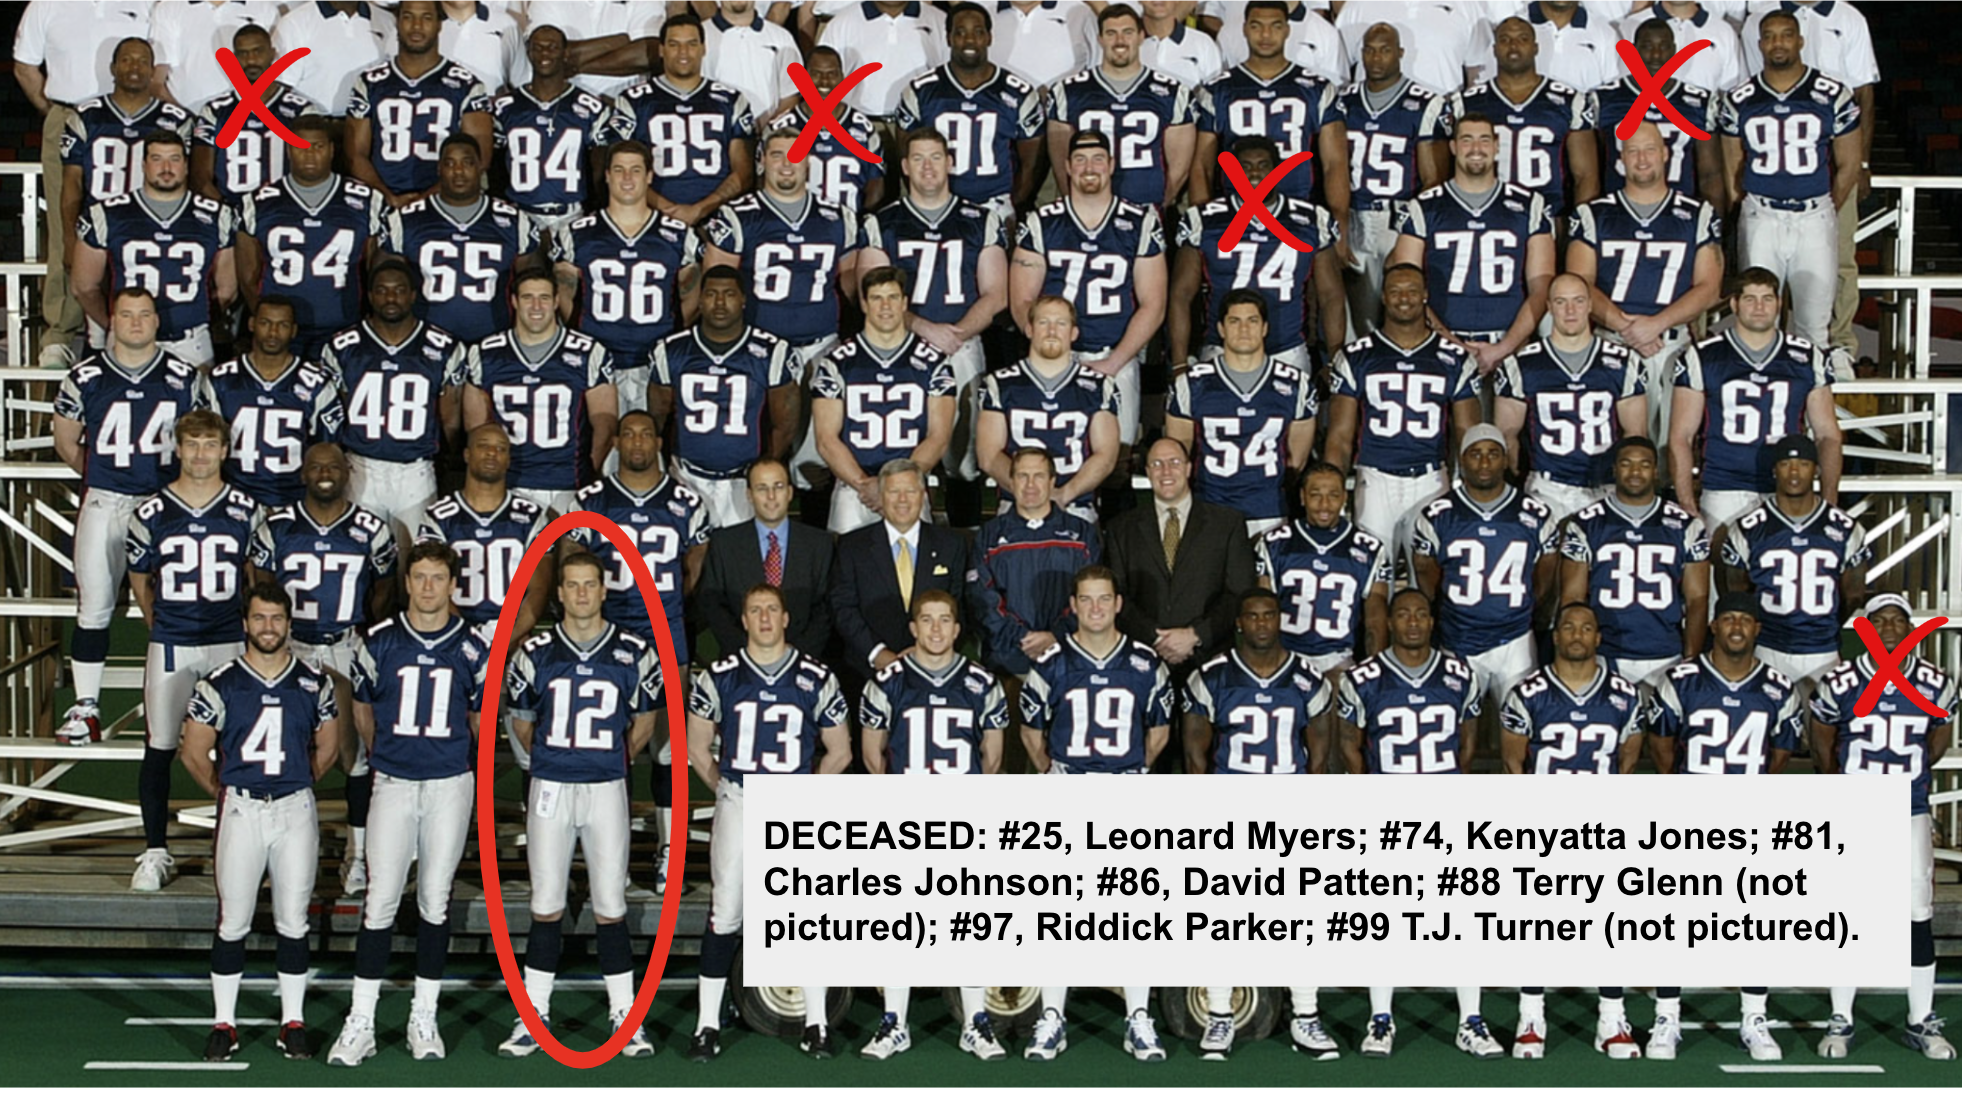 New England Patriots 2001 team photo